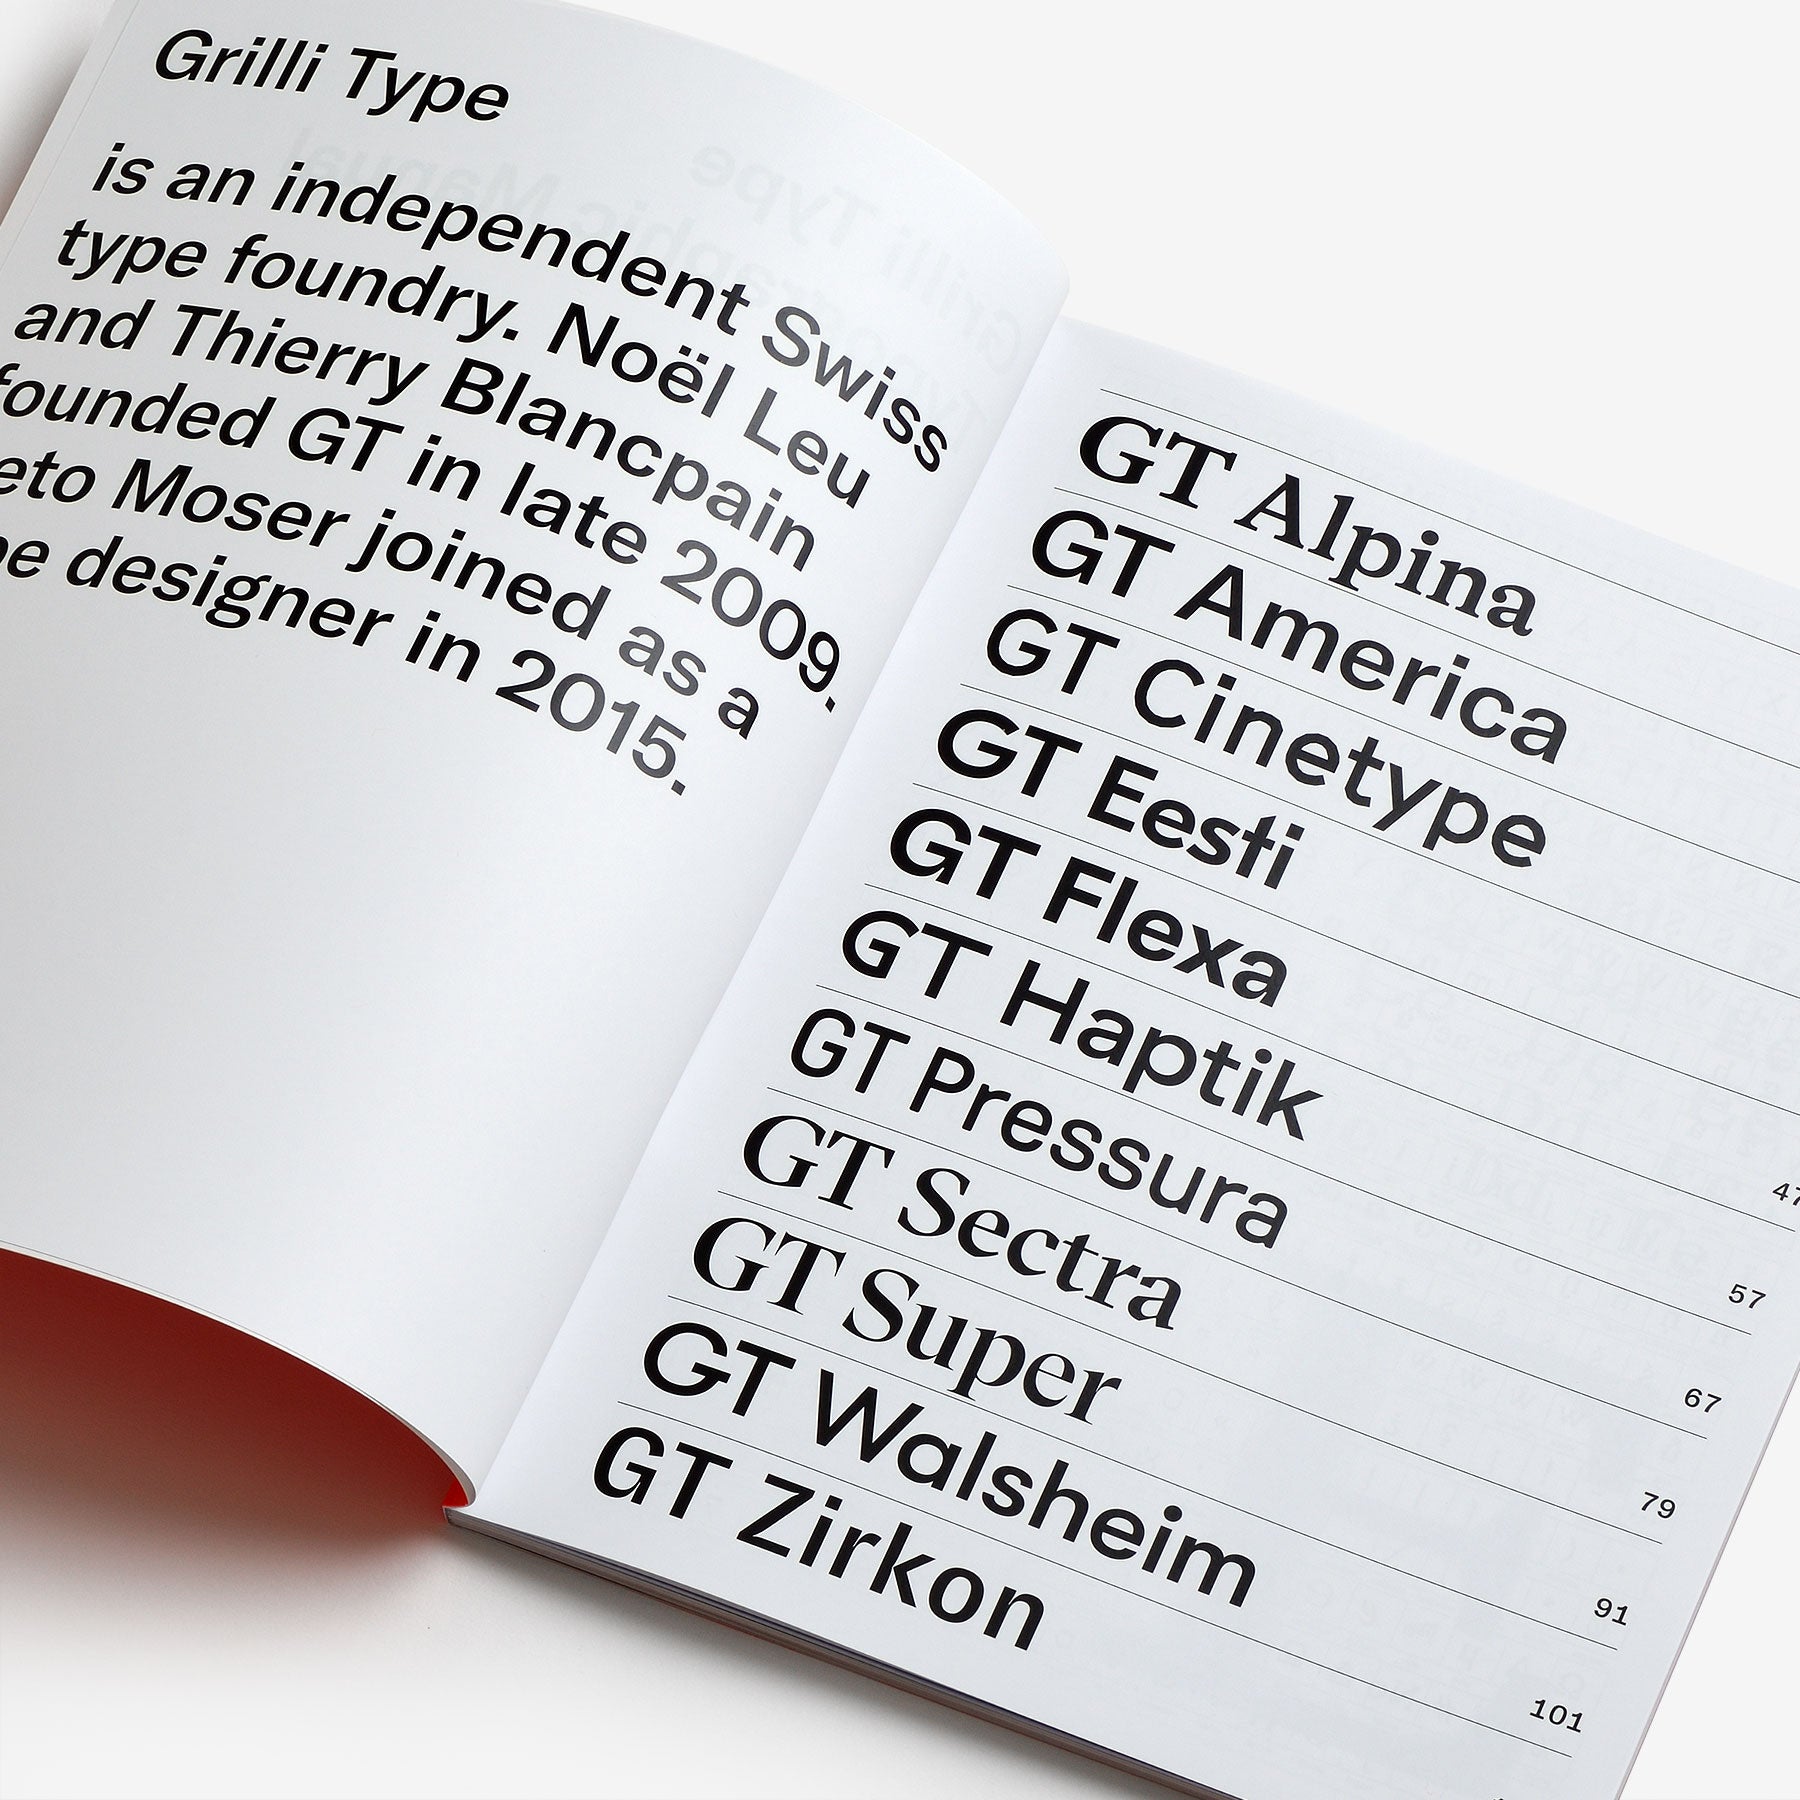 Typographic Manual